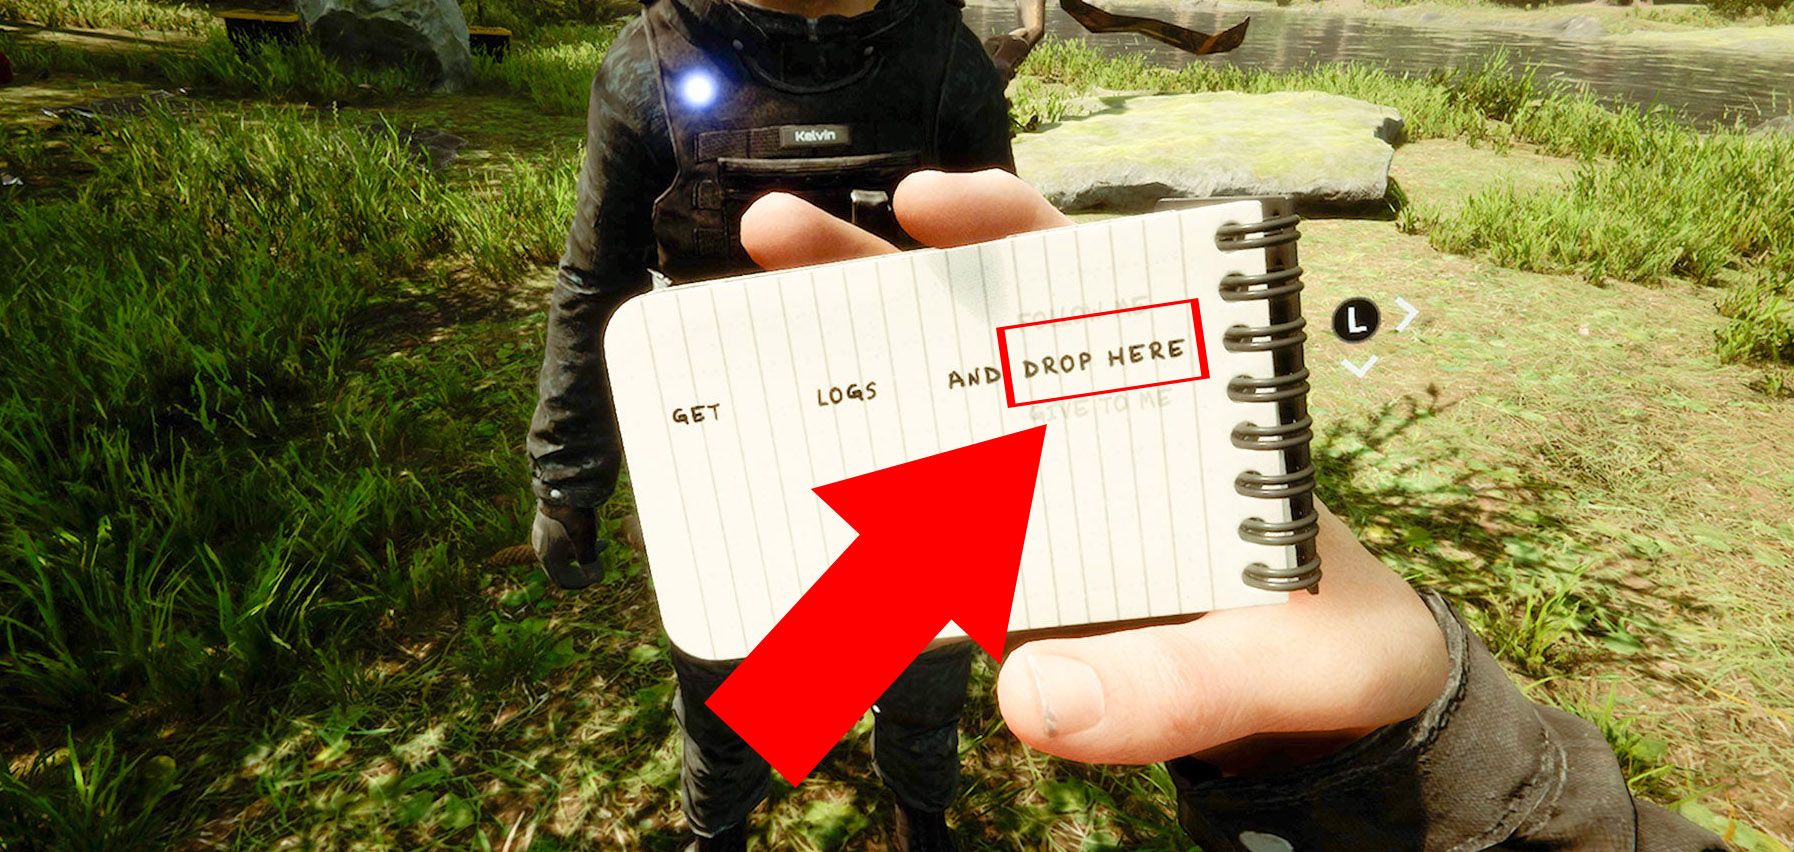 image showing kelvin's drop item command. 